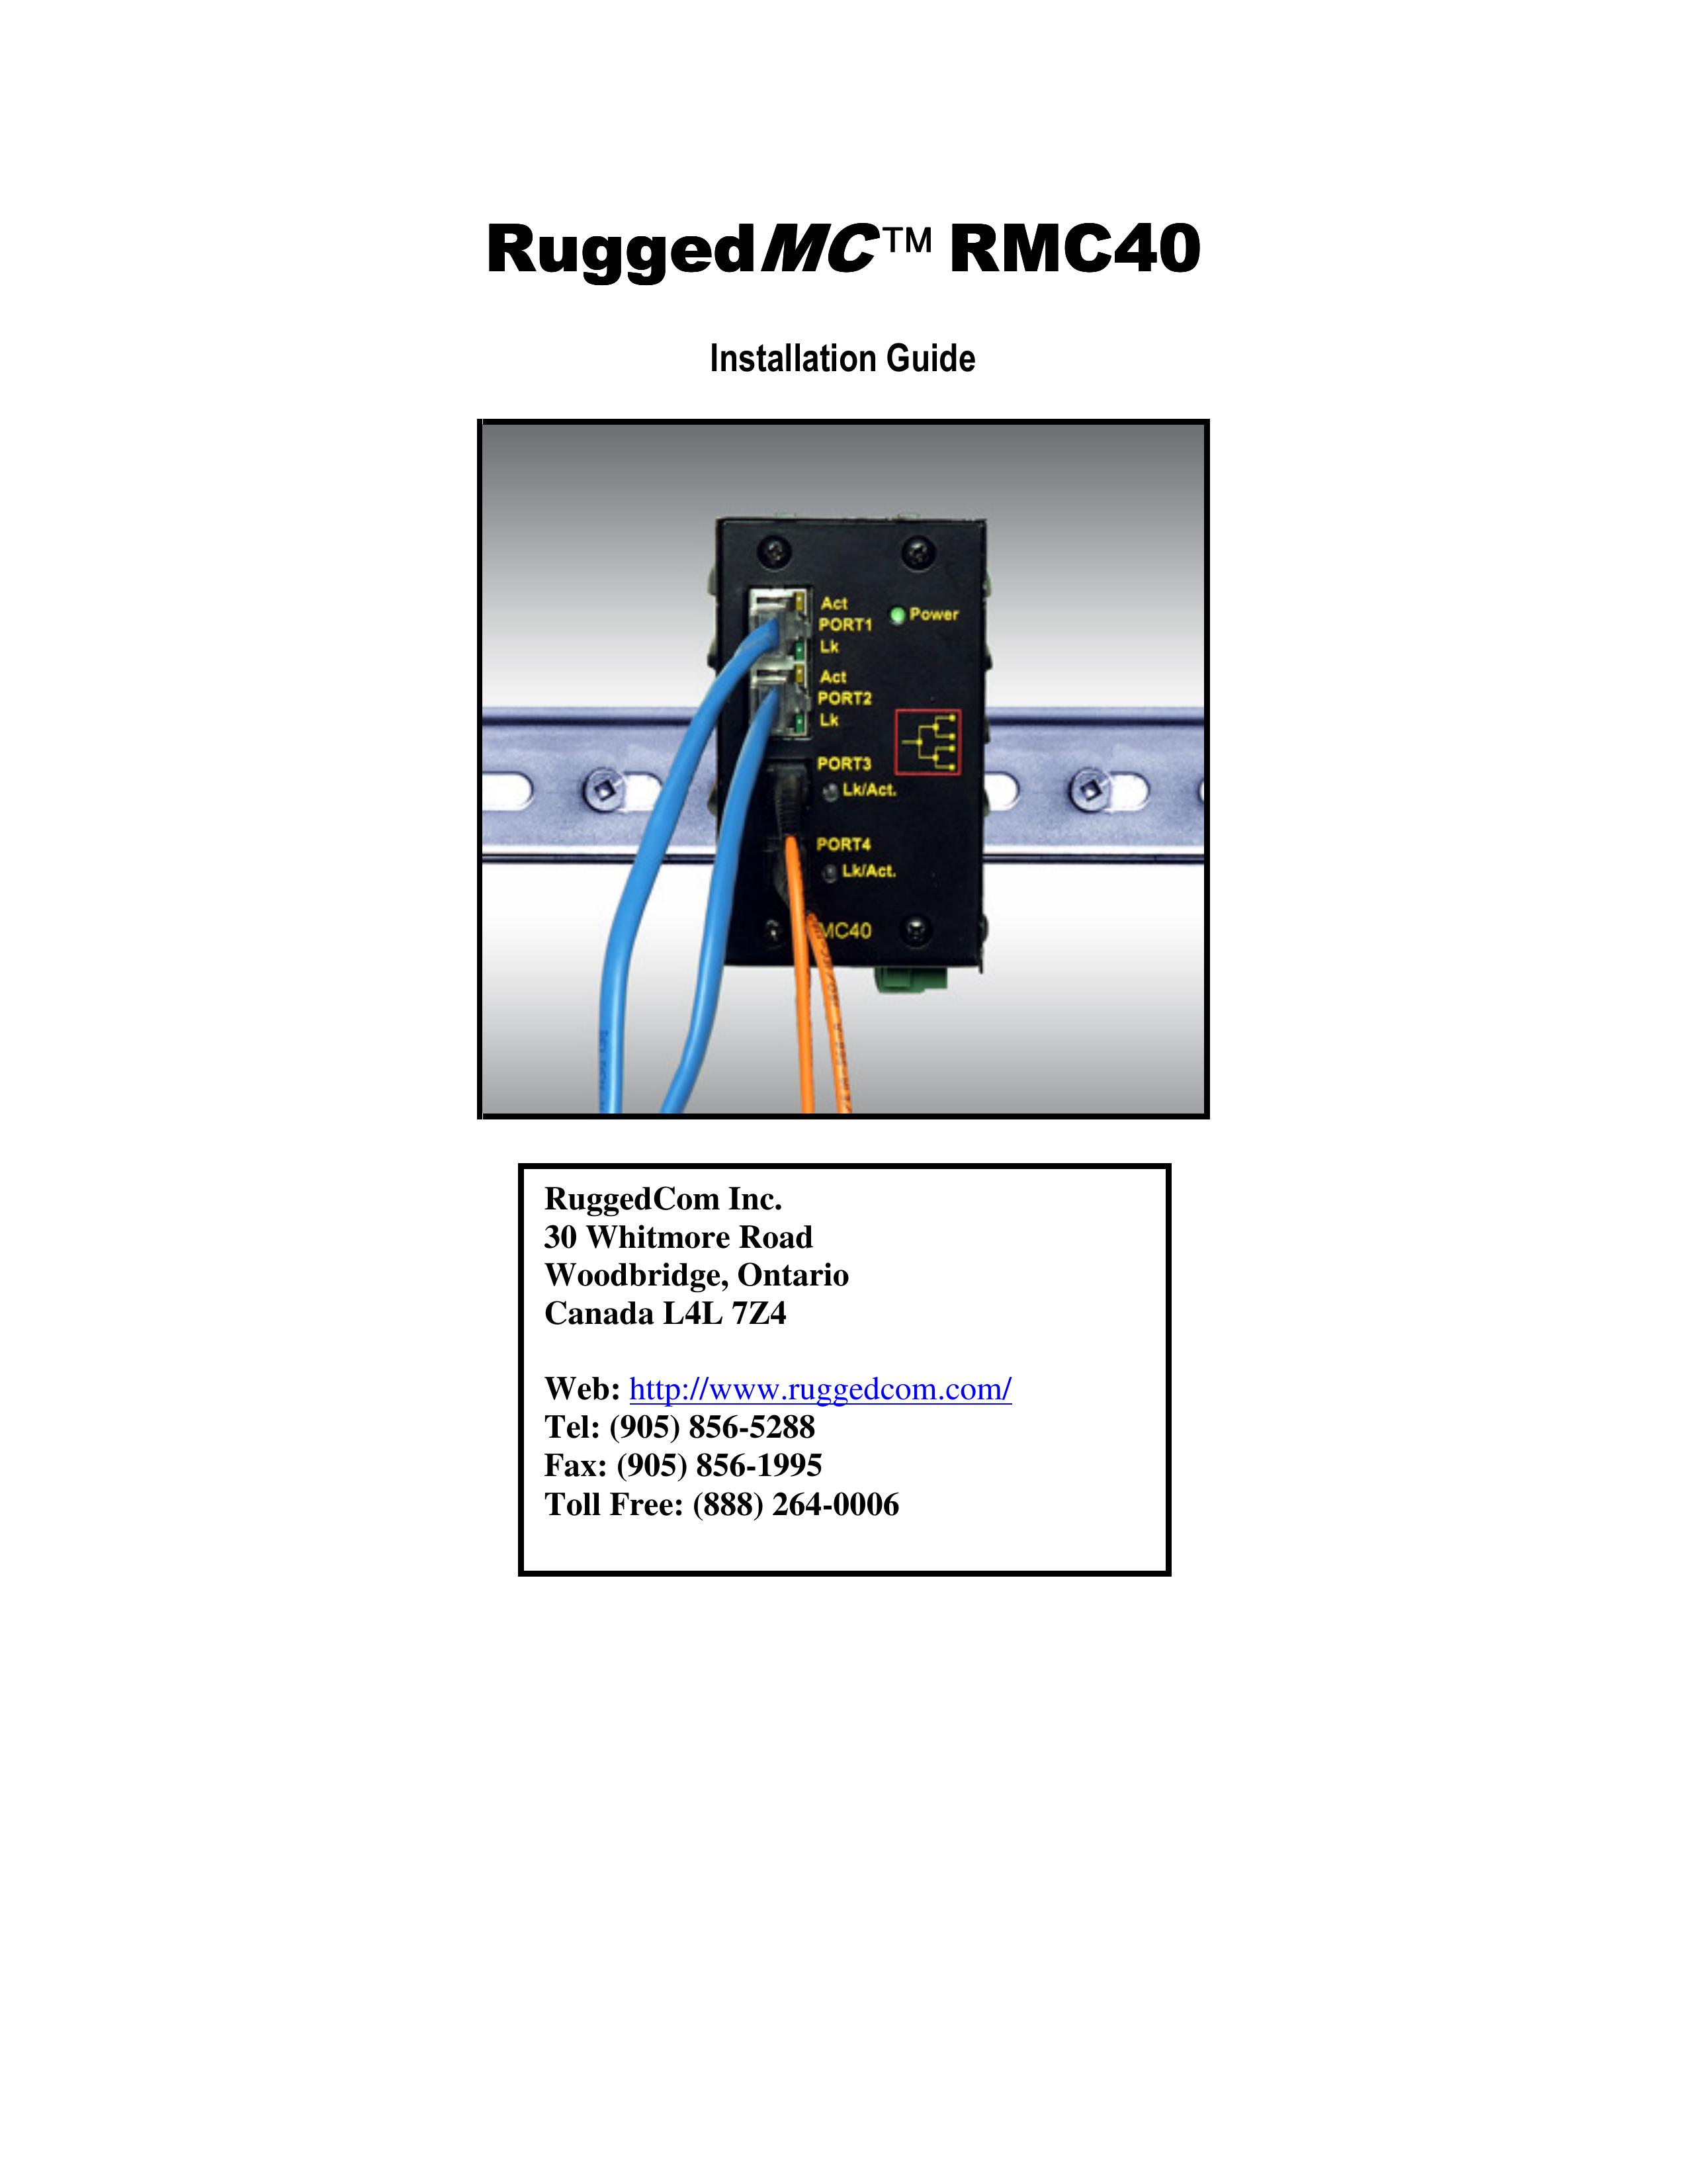 RuggedCom RMC40 Weather Radio User Manual